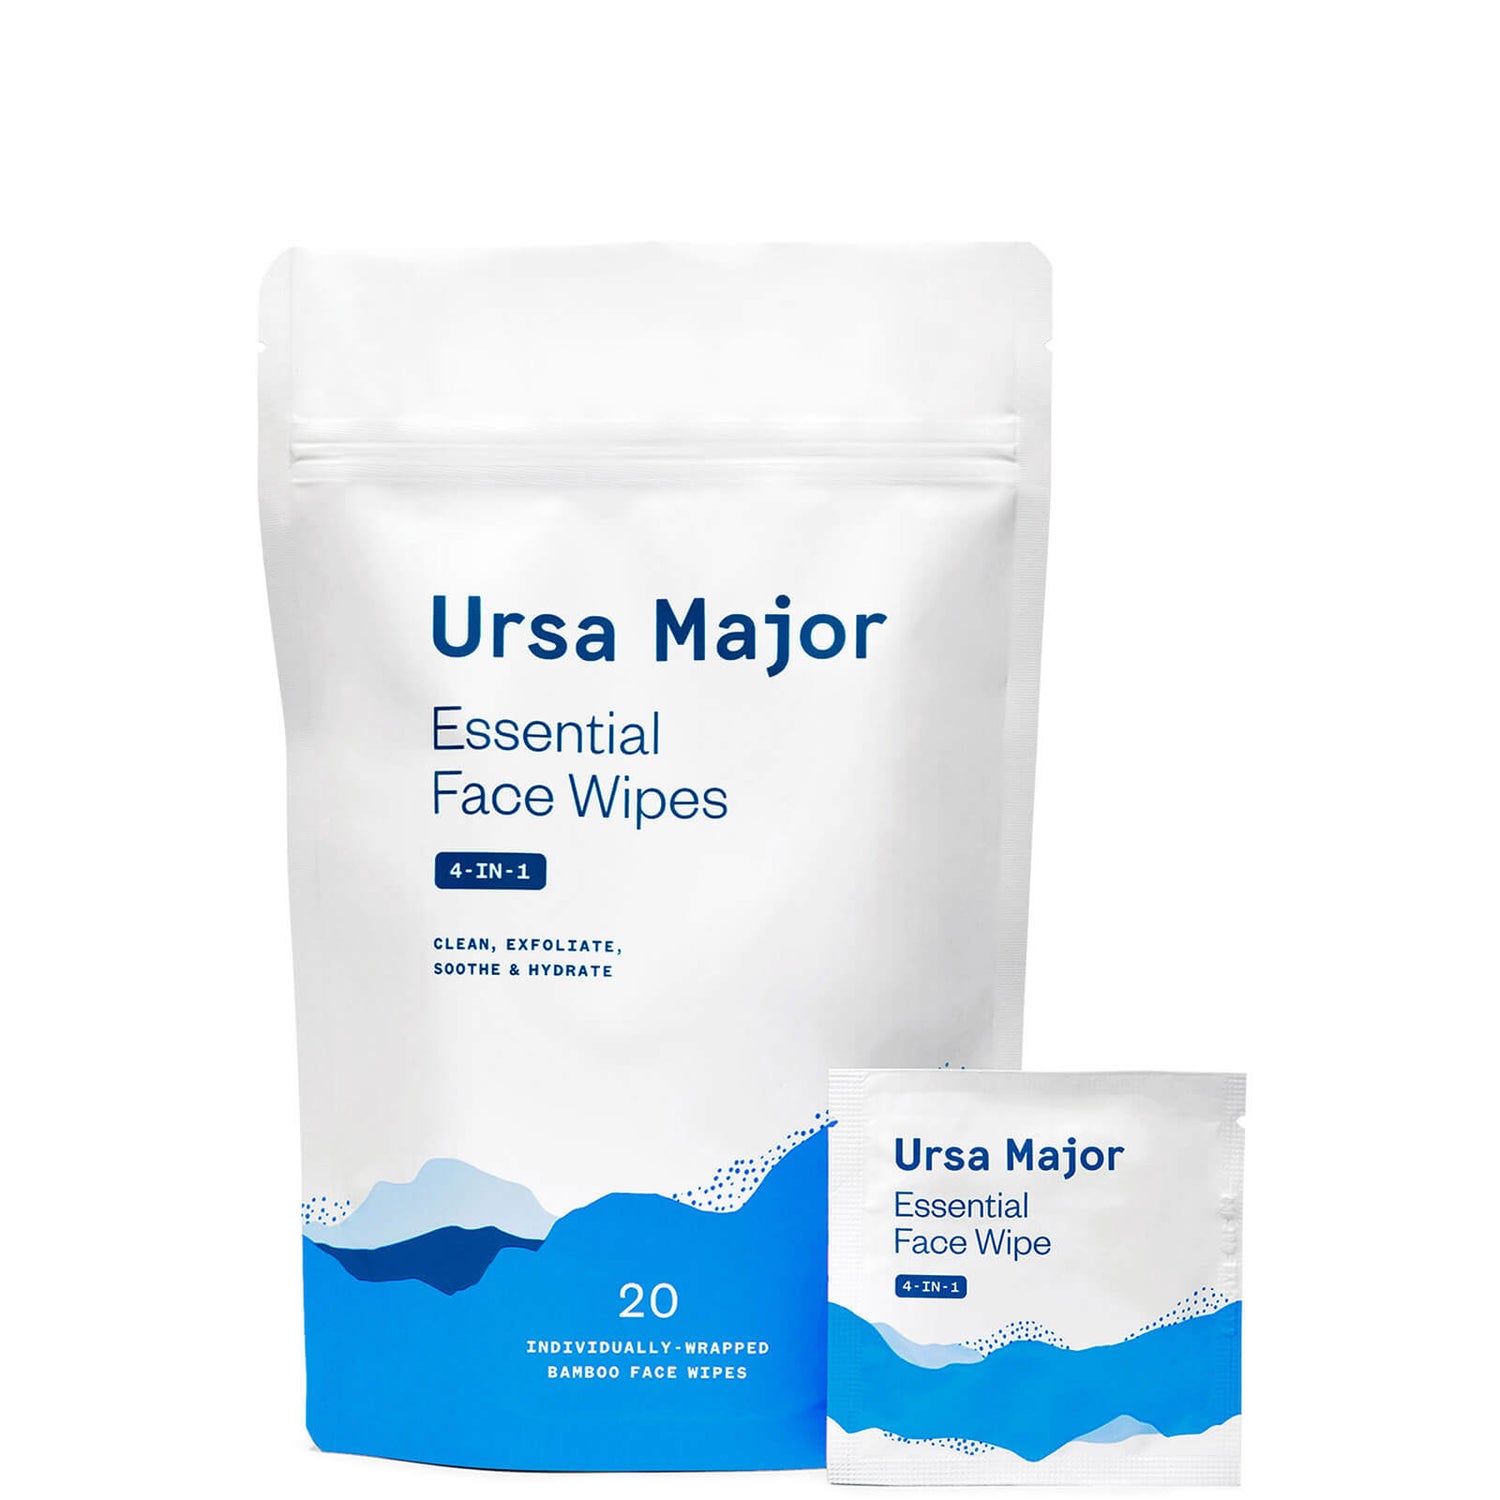 Ursa Major Essential Face Wipes (20 count)